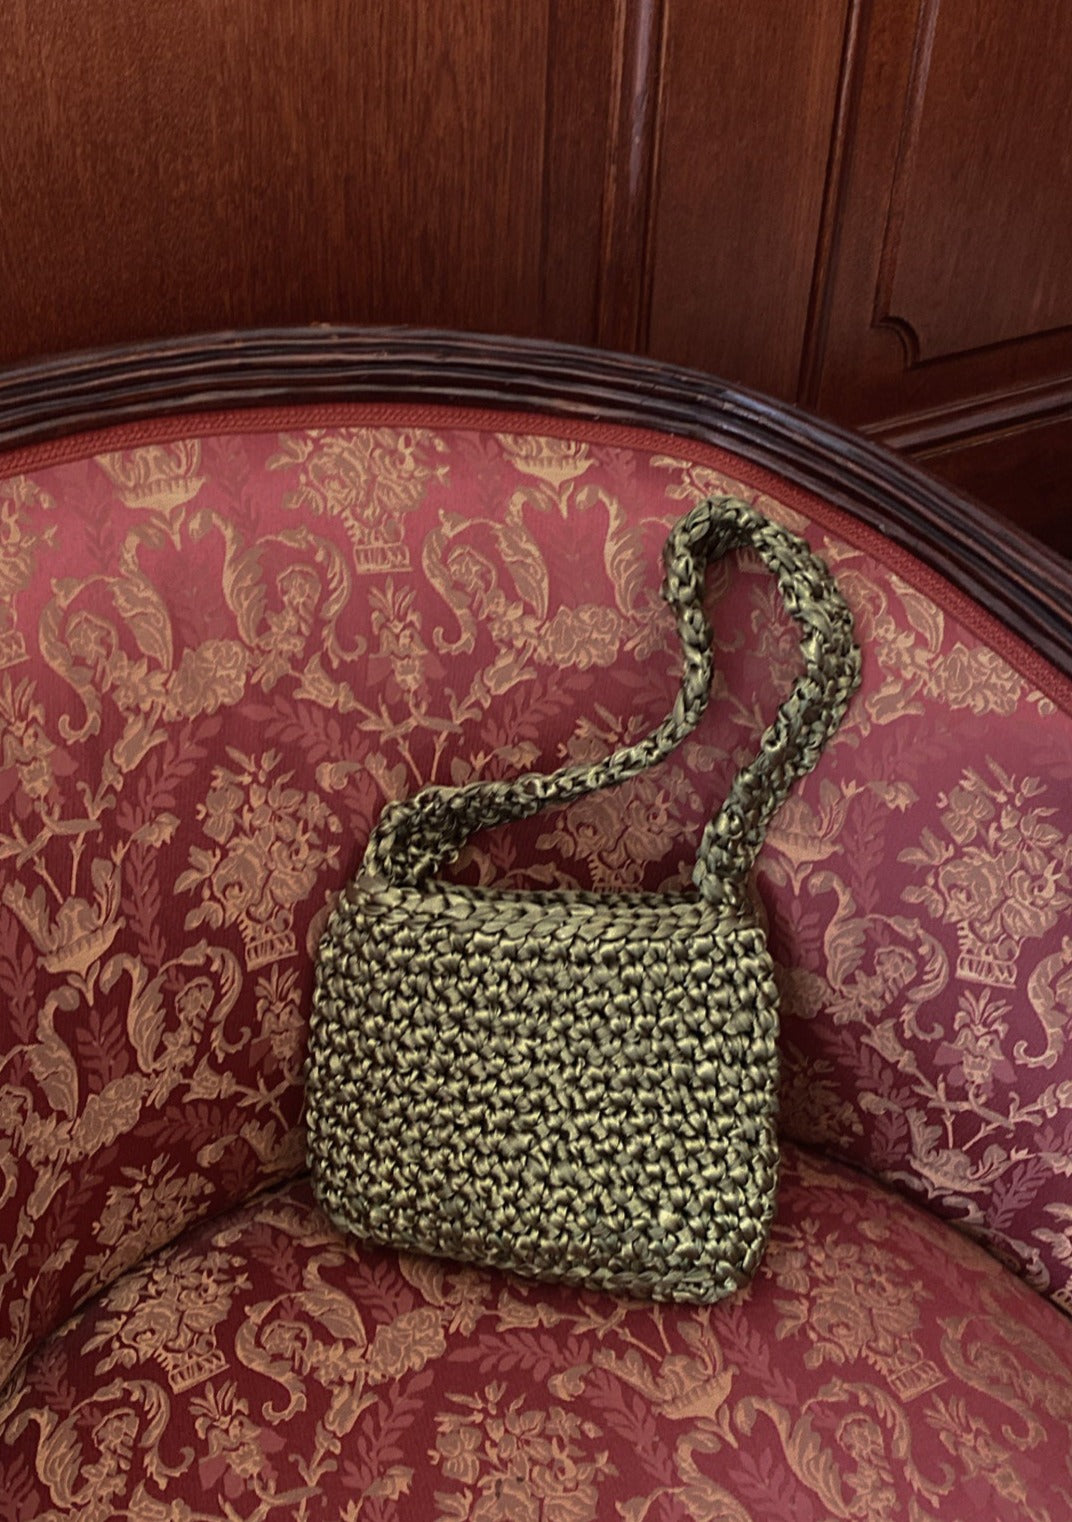 Olive Green crochet bag